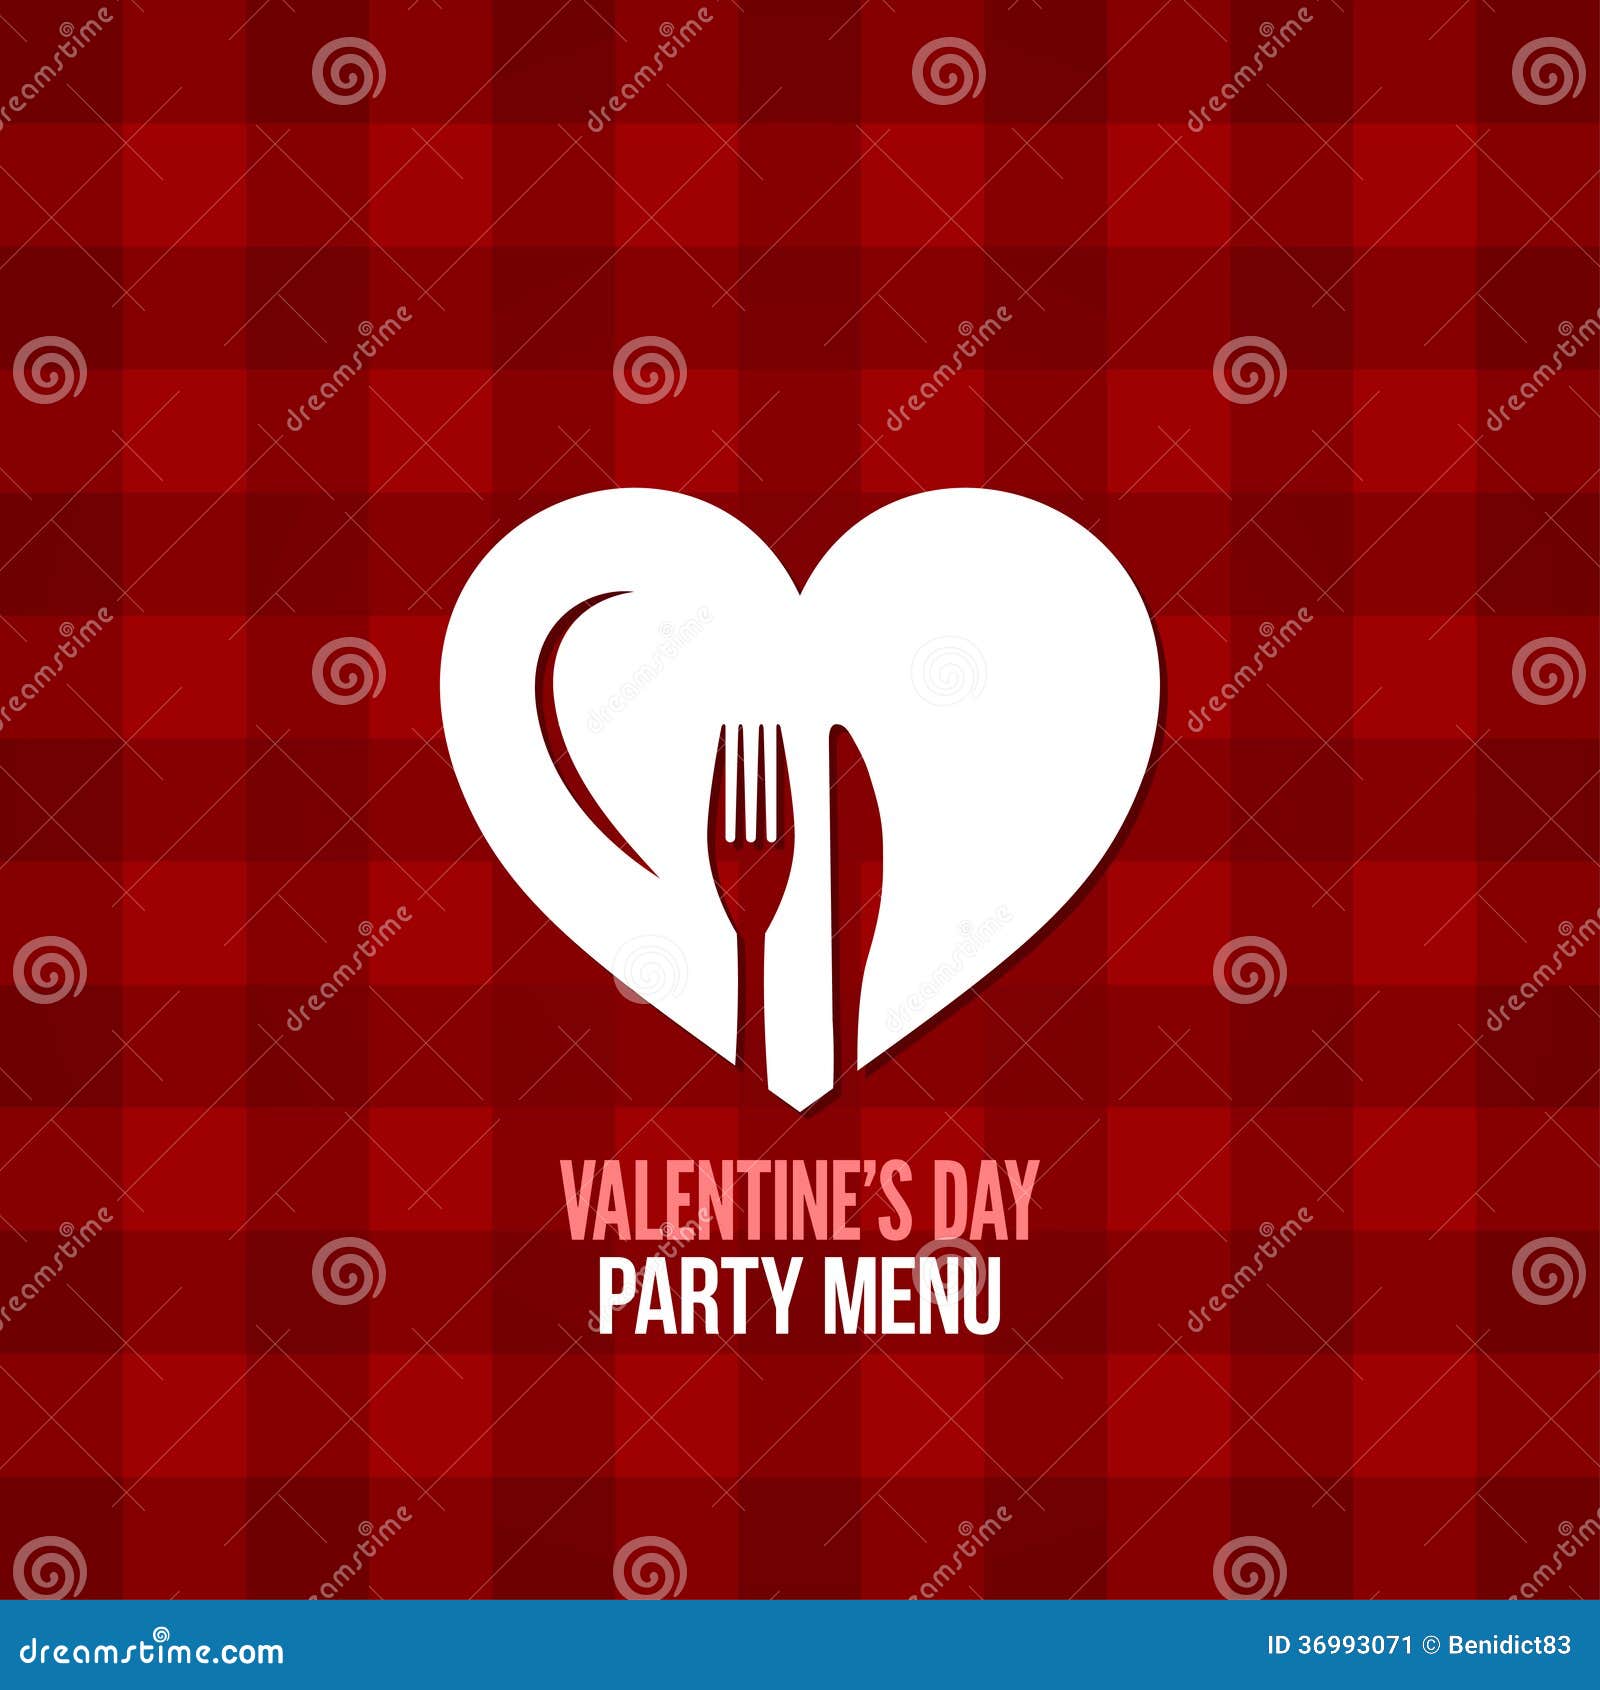 Valentines Day Menu Food Drink Design Background Stock Image - Image: 369930711300 x 1390